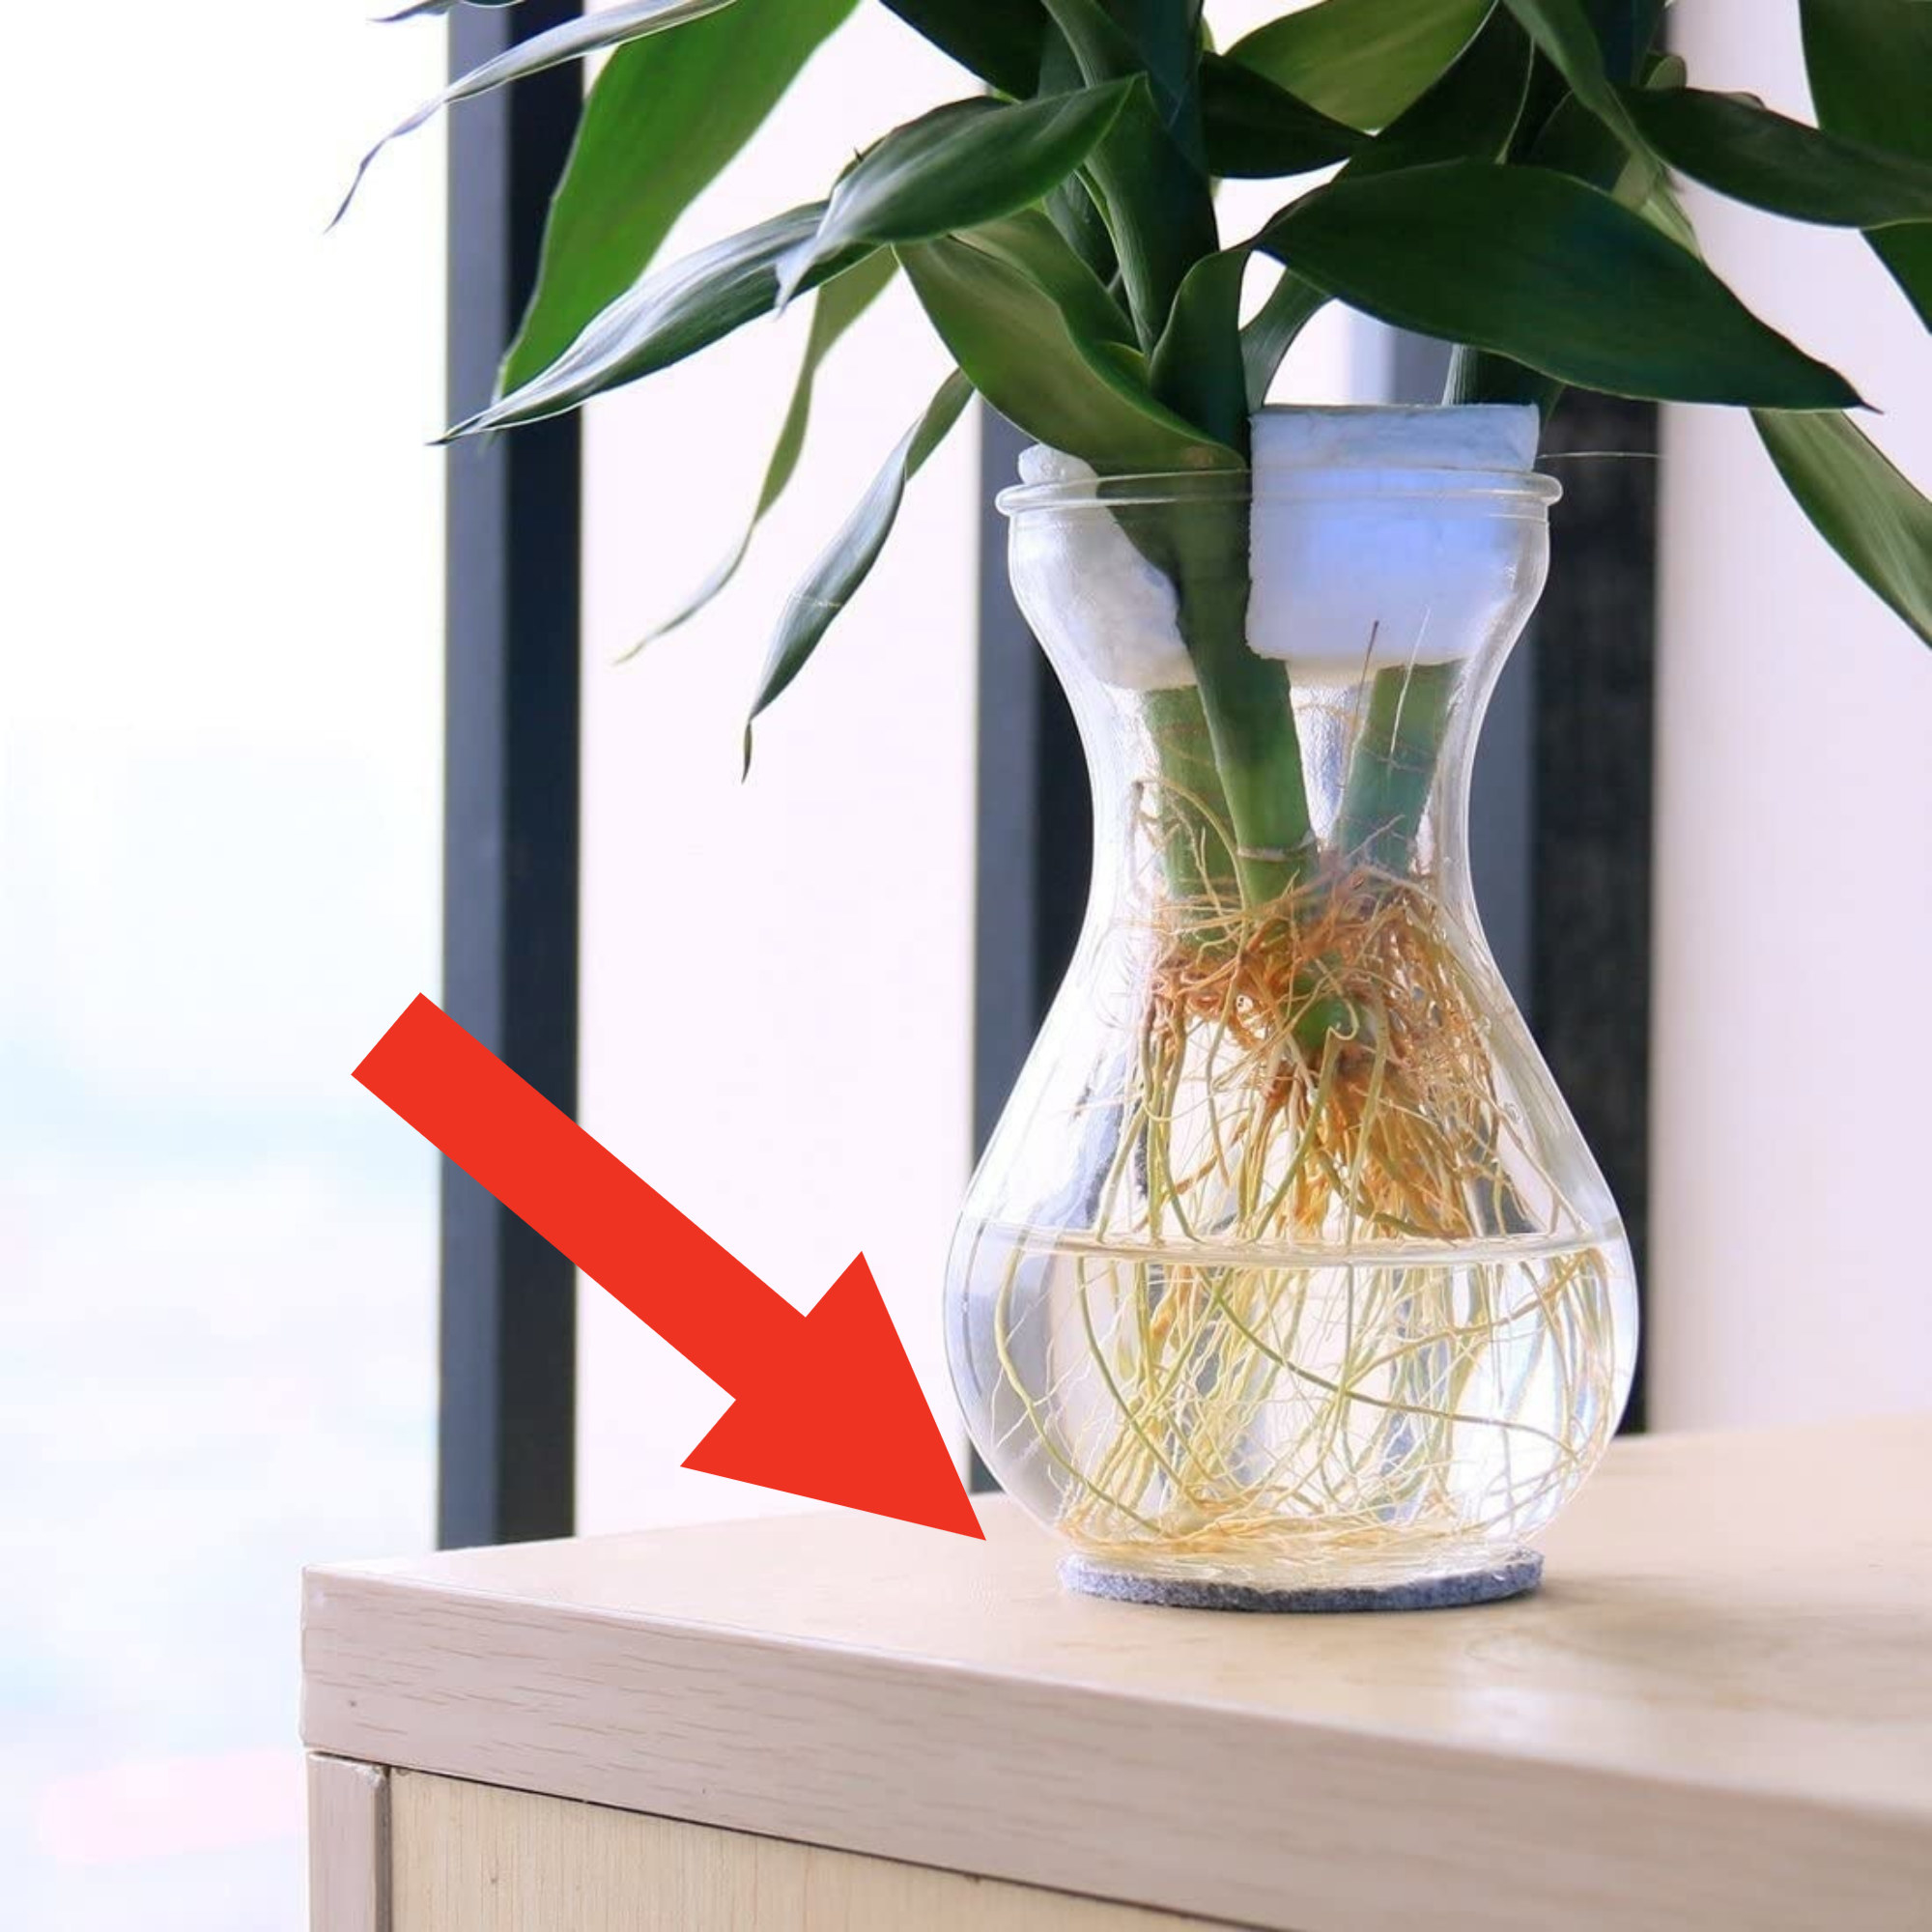 A circle of adhesive felt tape underneath a vase